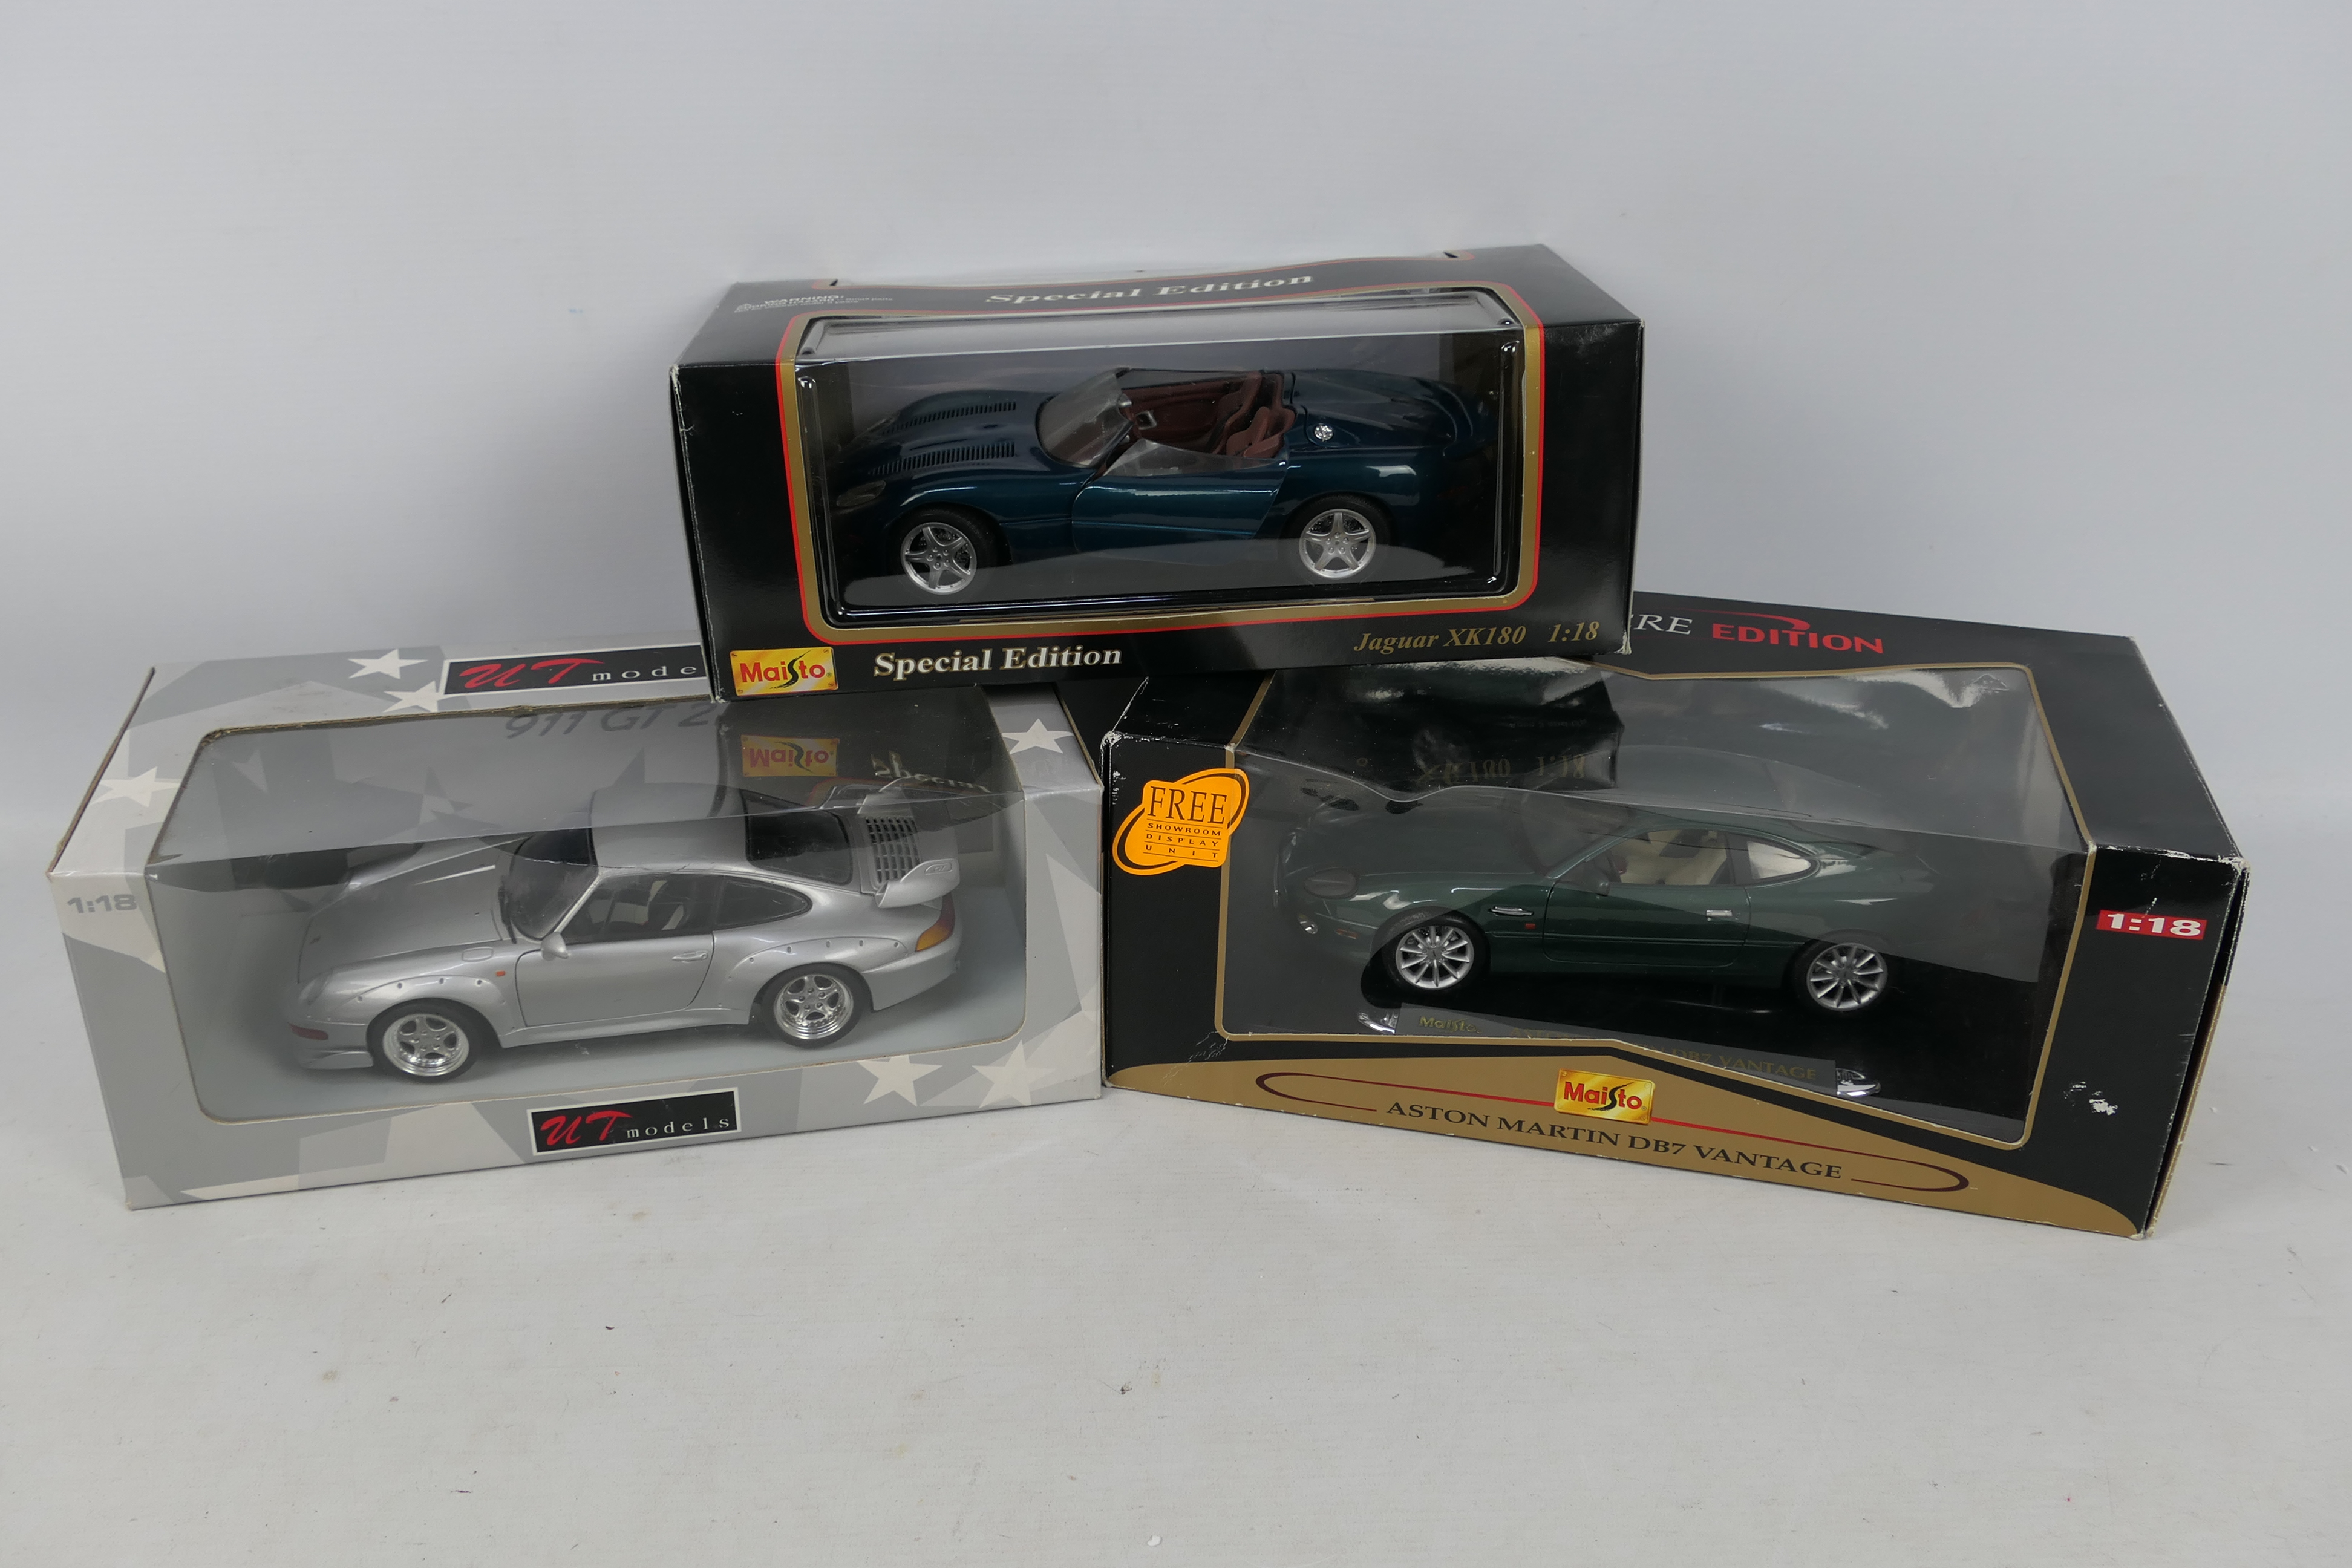 UT Models - Maisto - 3 x boxed cars in 1:18 scale, Porsche 911 GT2 # 021914,